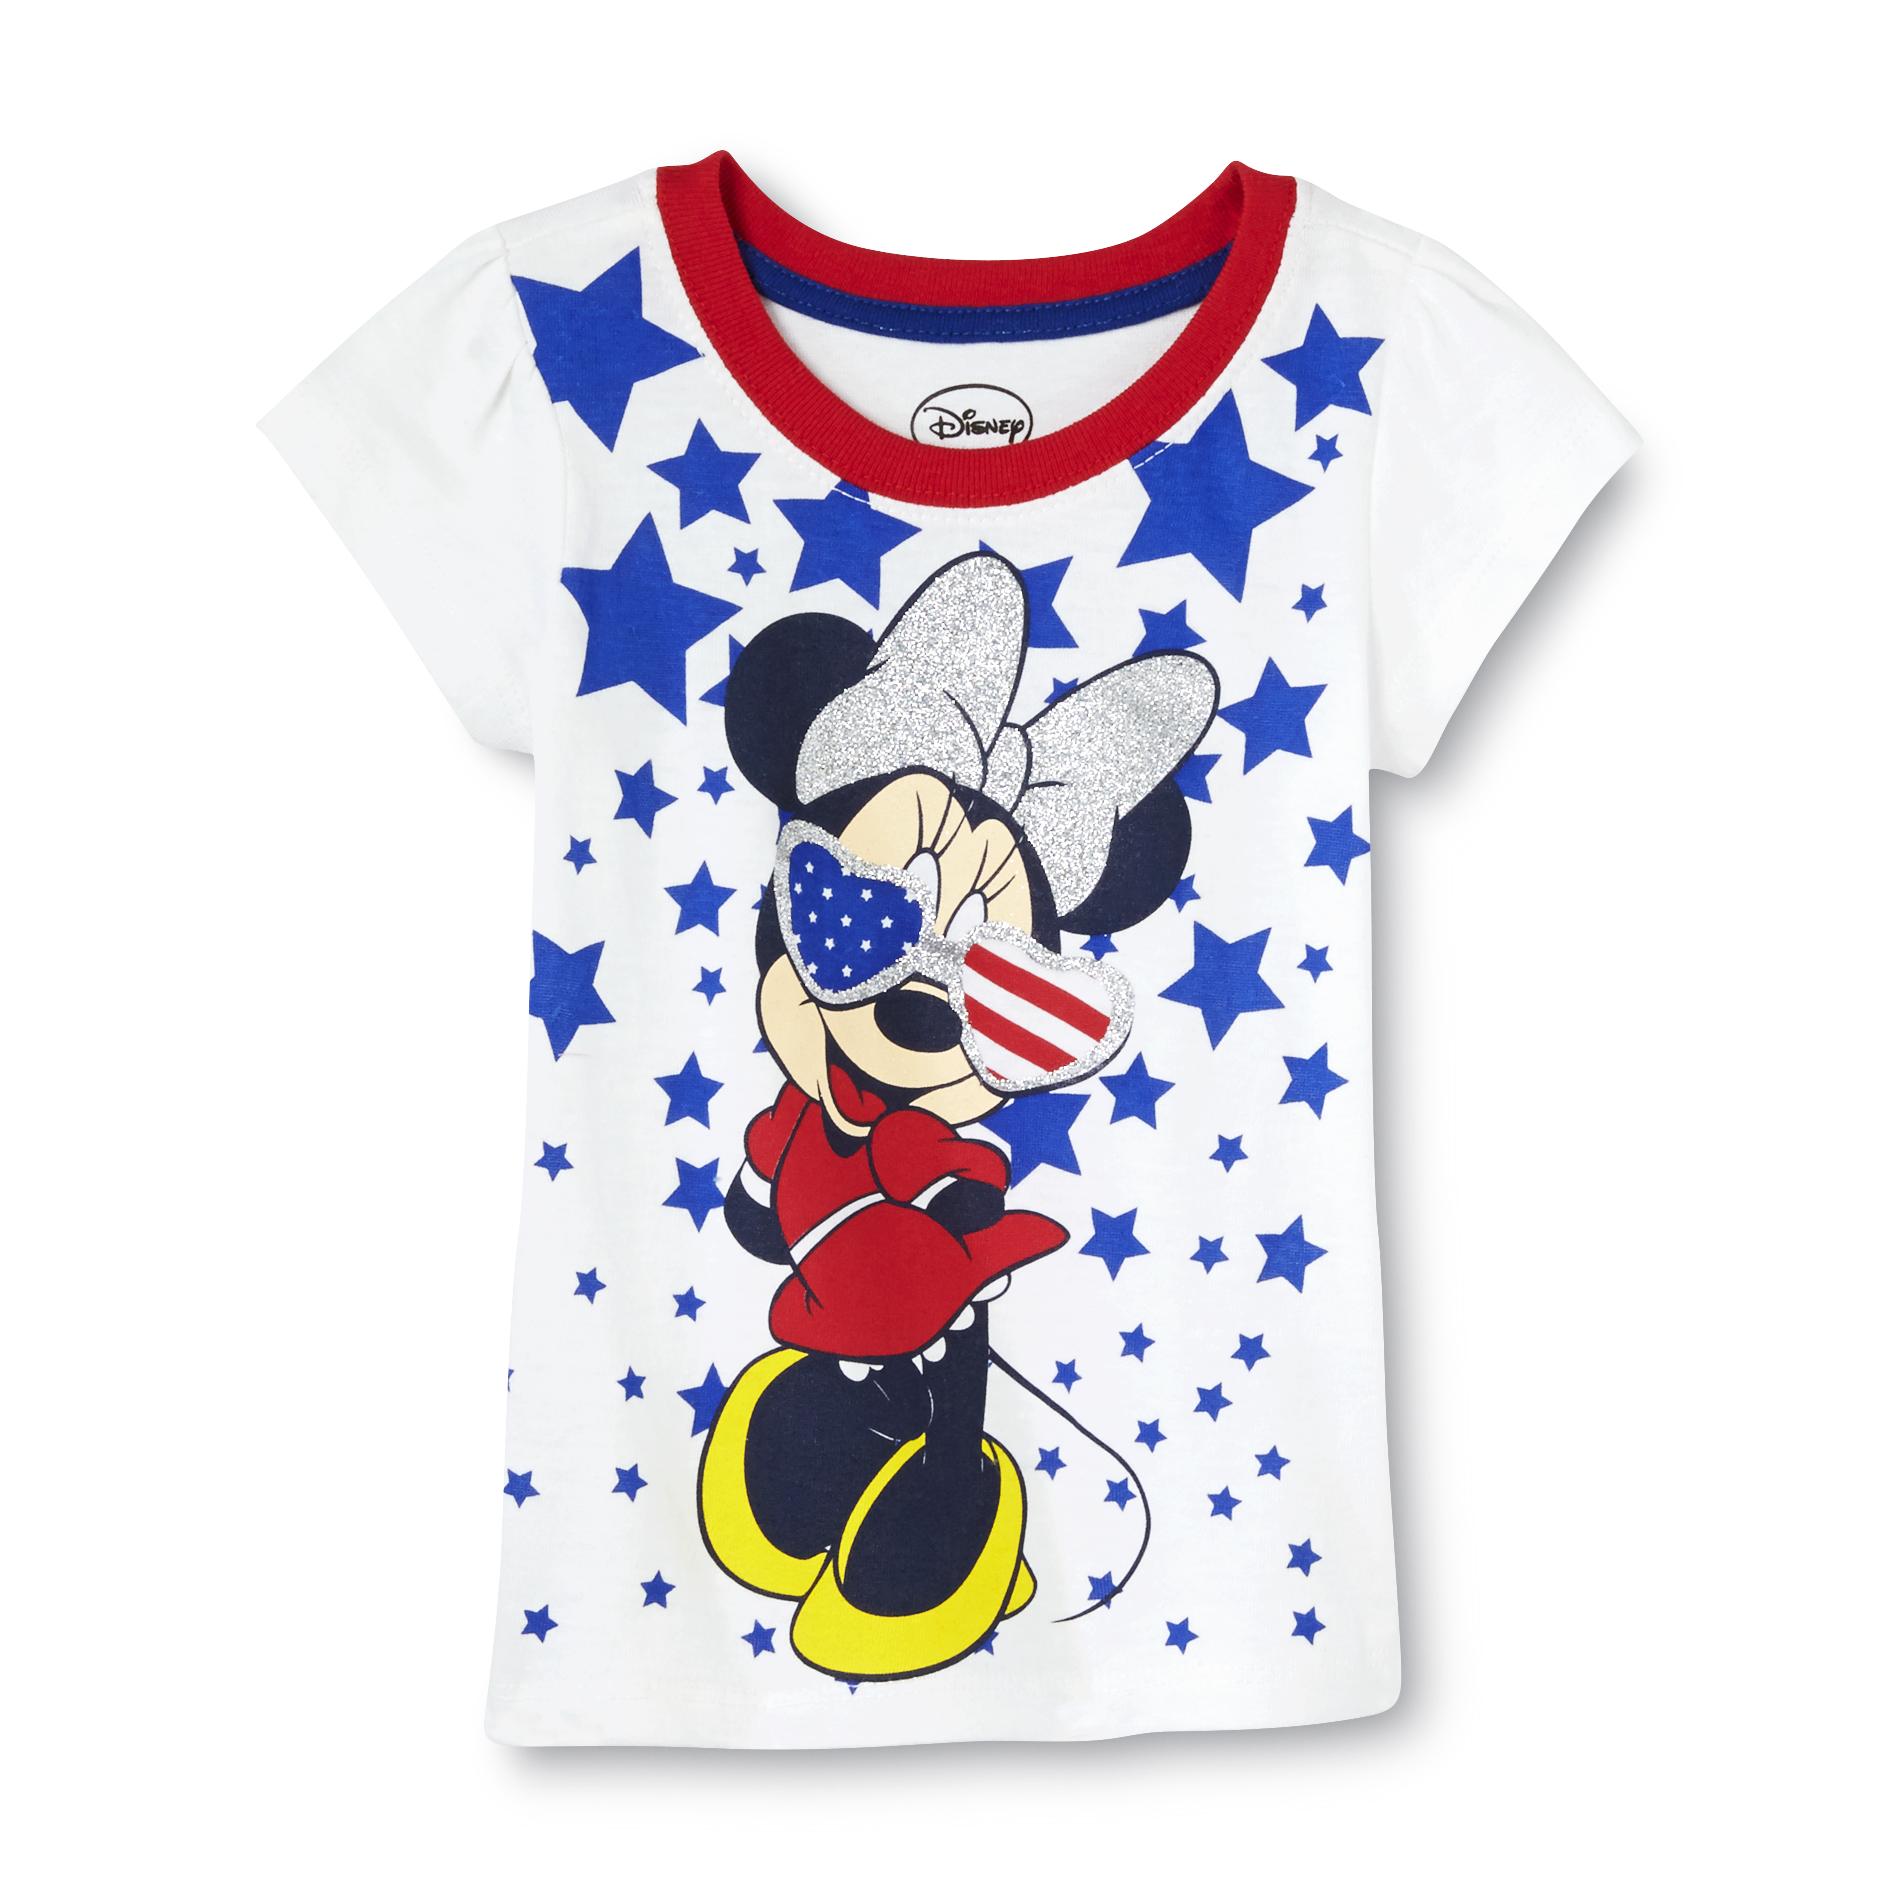 Disney Toddler Girl's Glittery T-Shirt - American Minnie